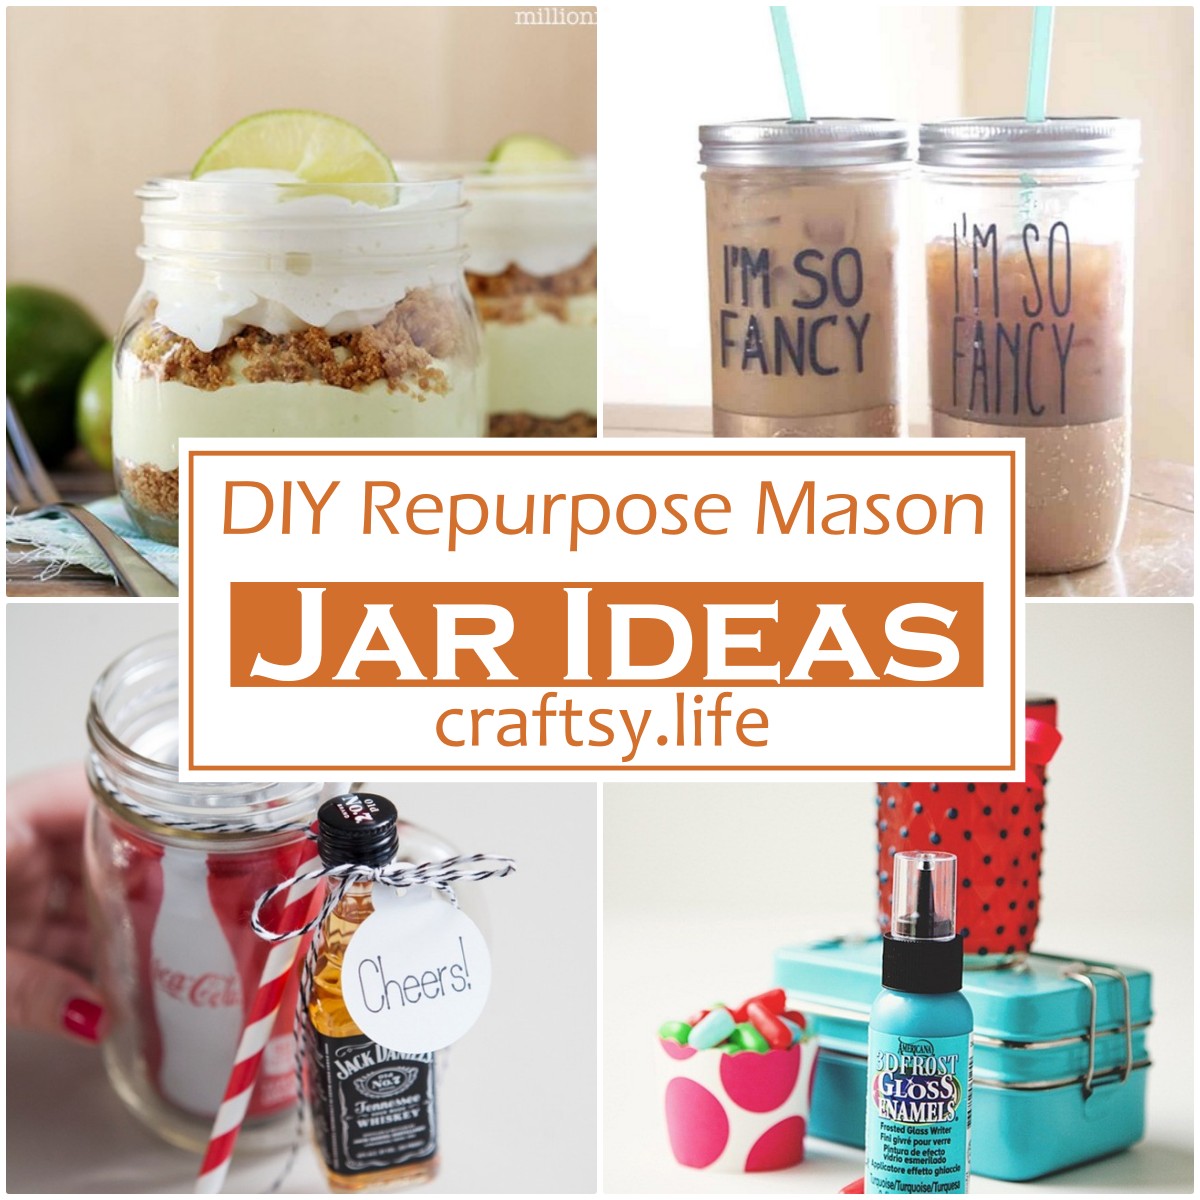 DIY Repurpose Mason Jar Ideas